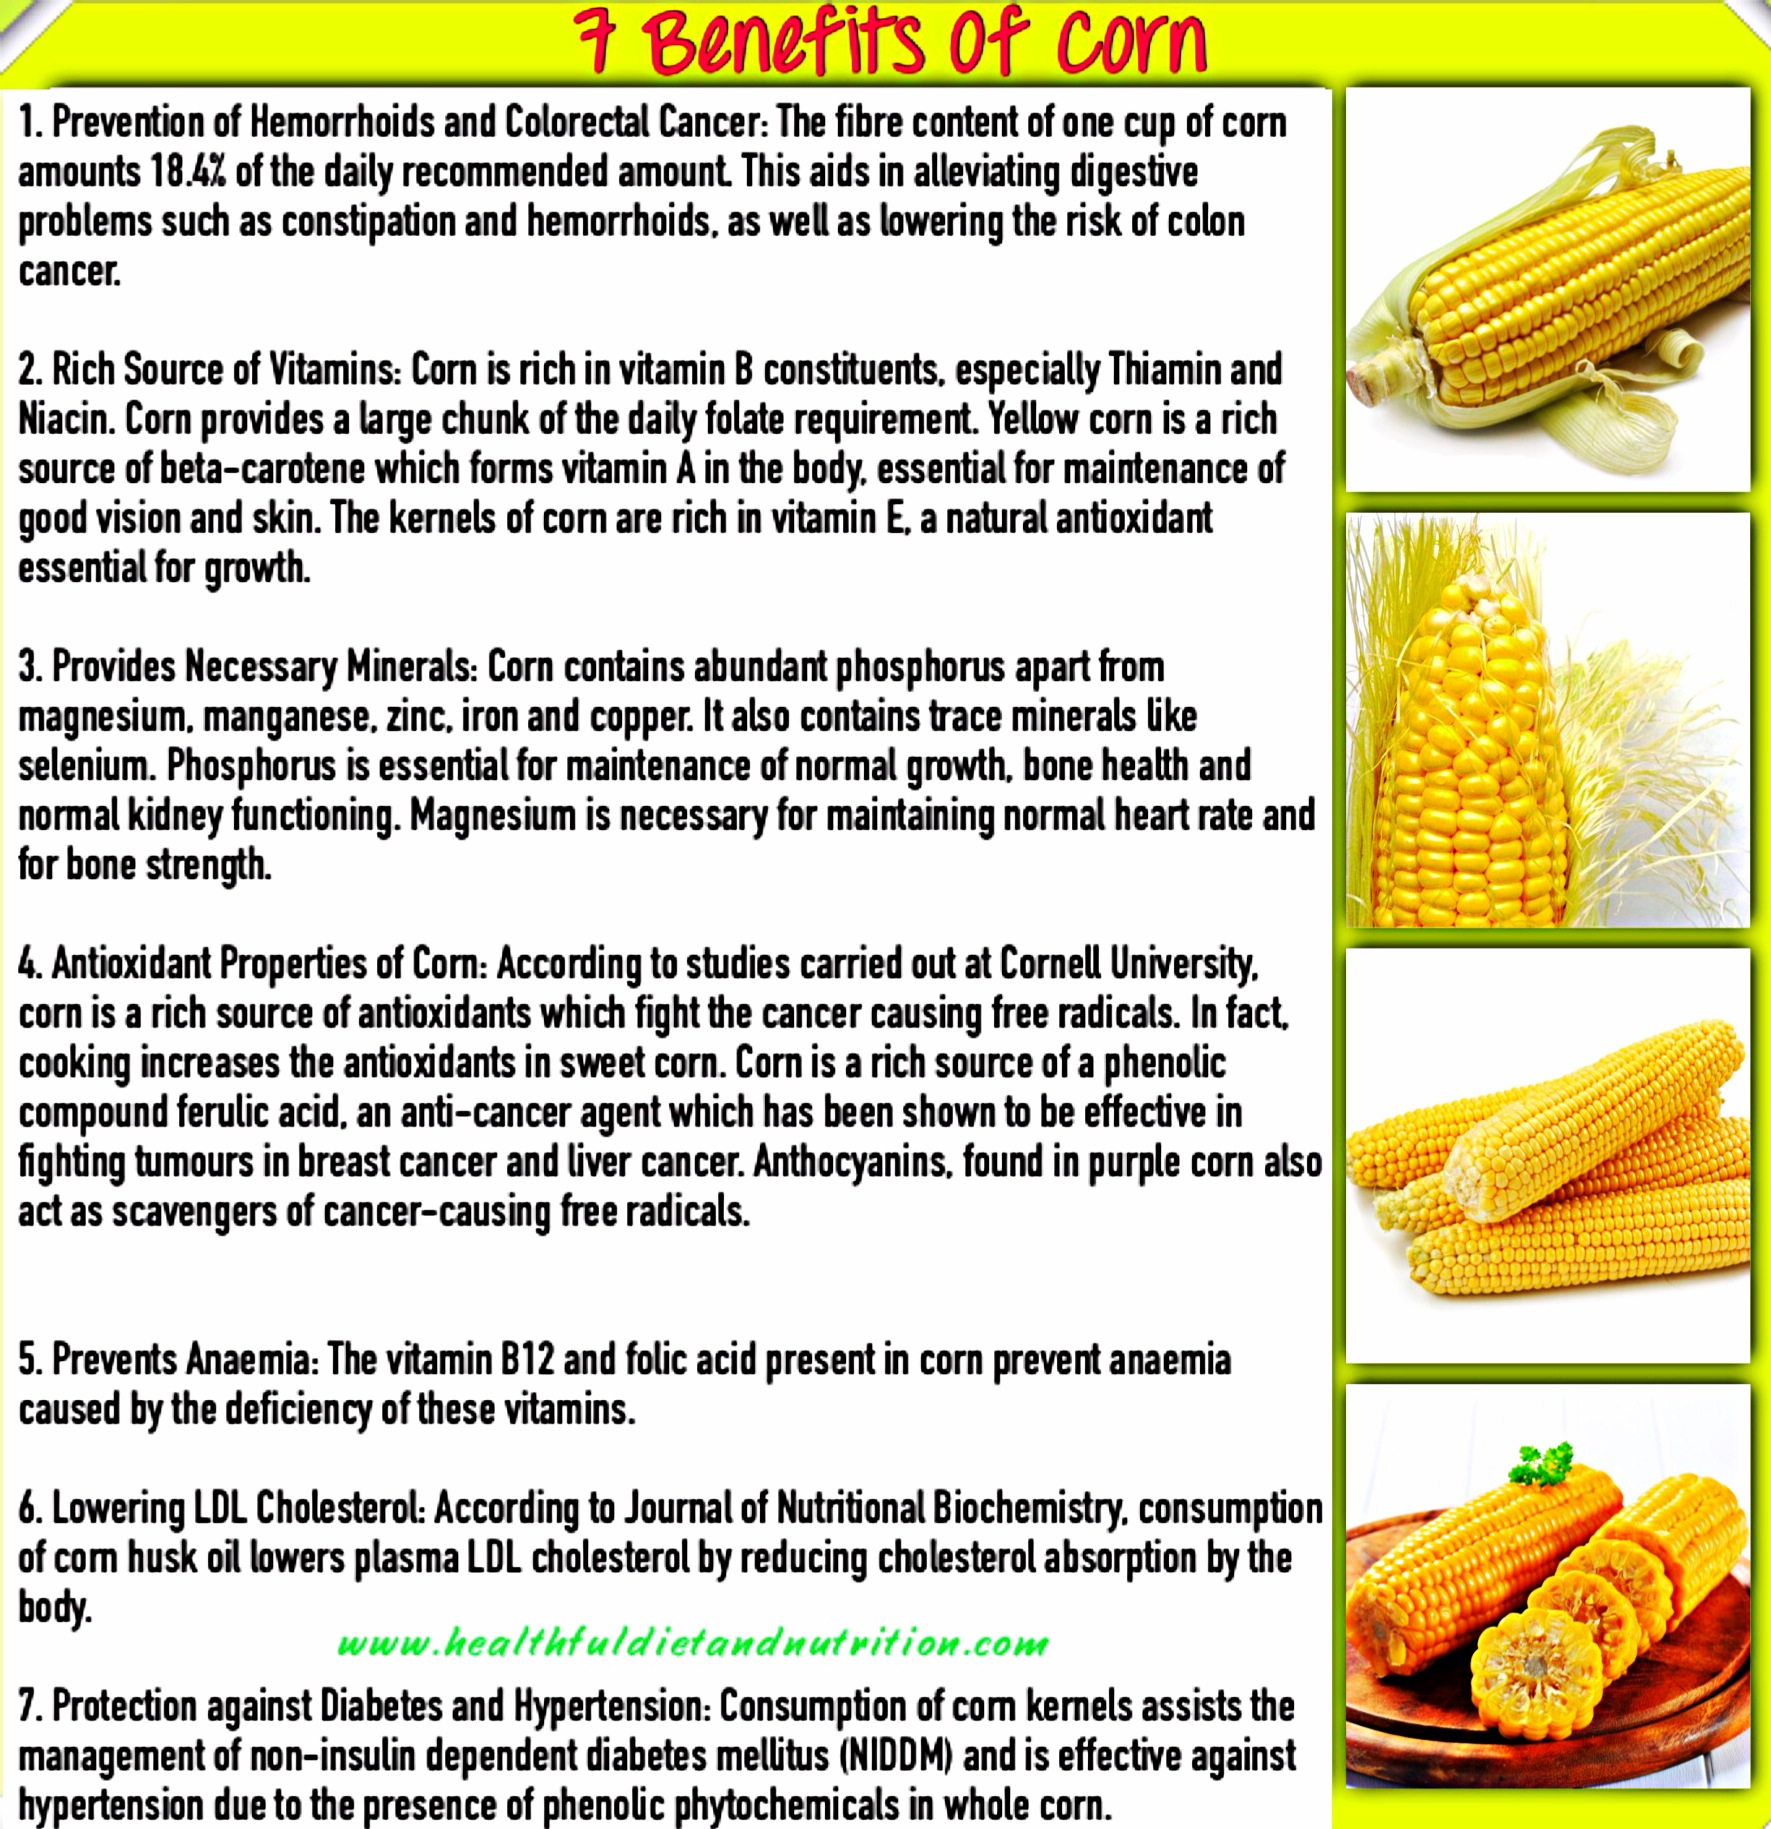 7 Benefits of Corn